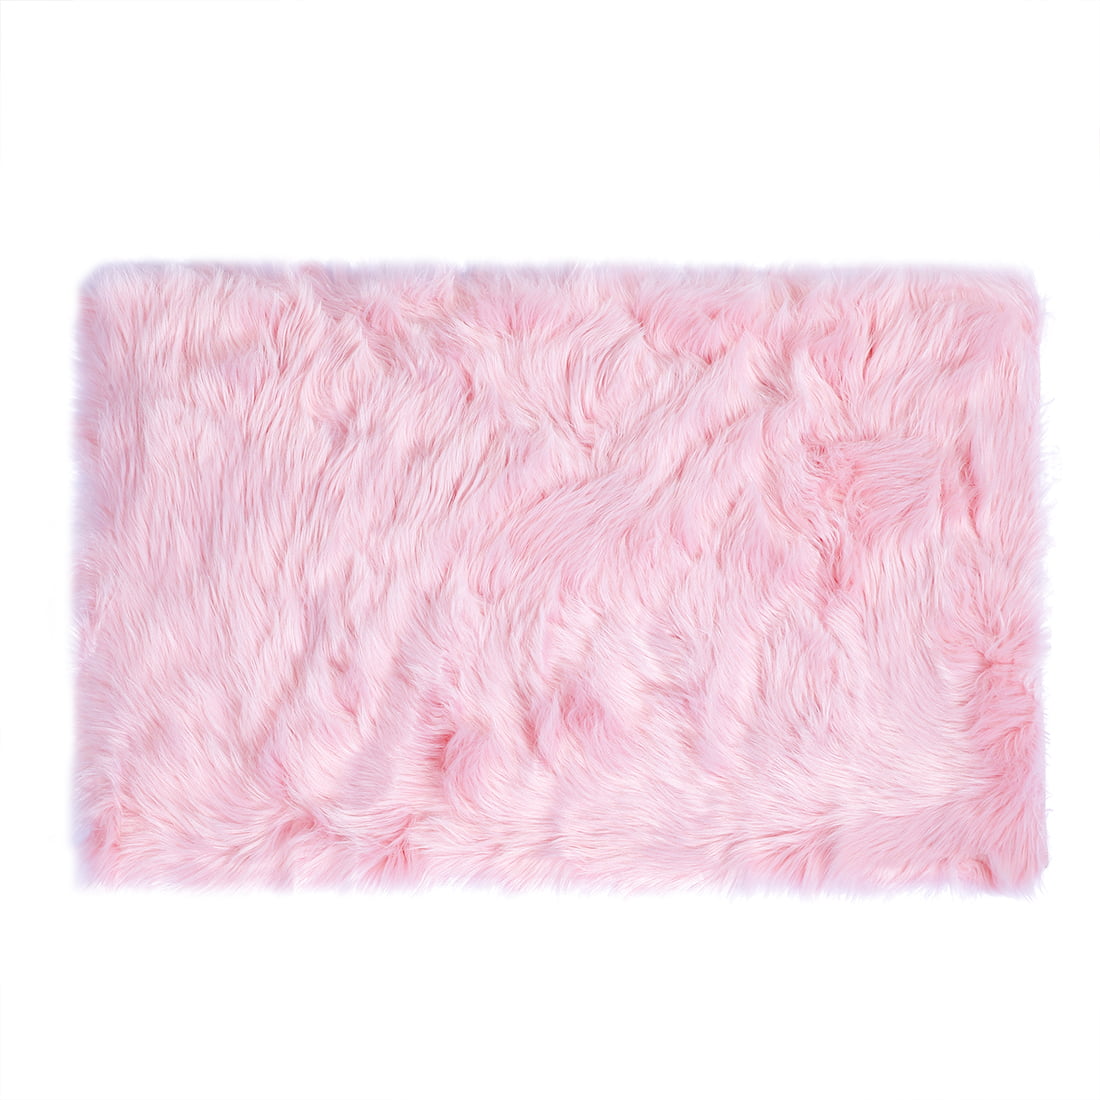 Piccocasa Faux Sheepskin Rug For, Pale Pink Fur Rug